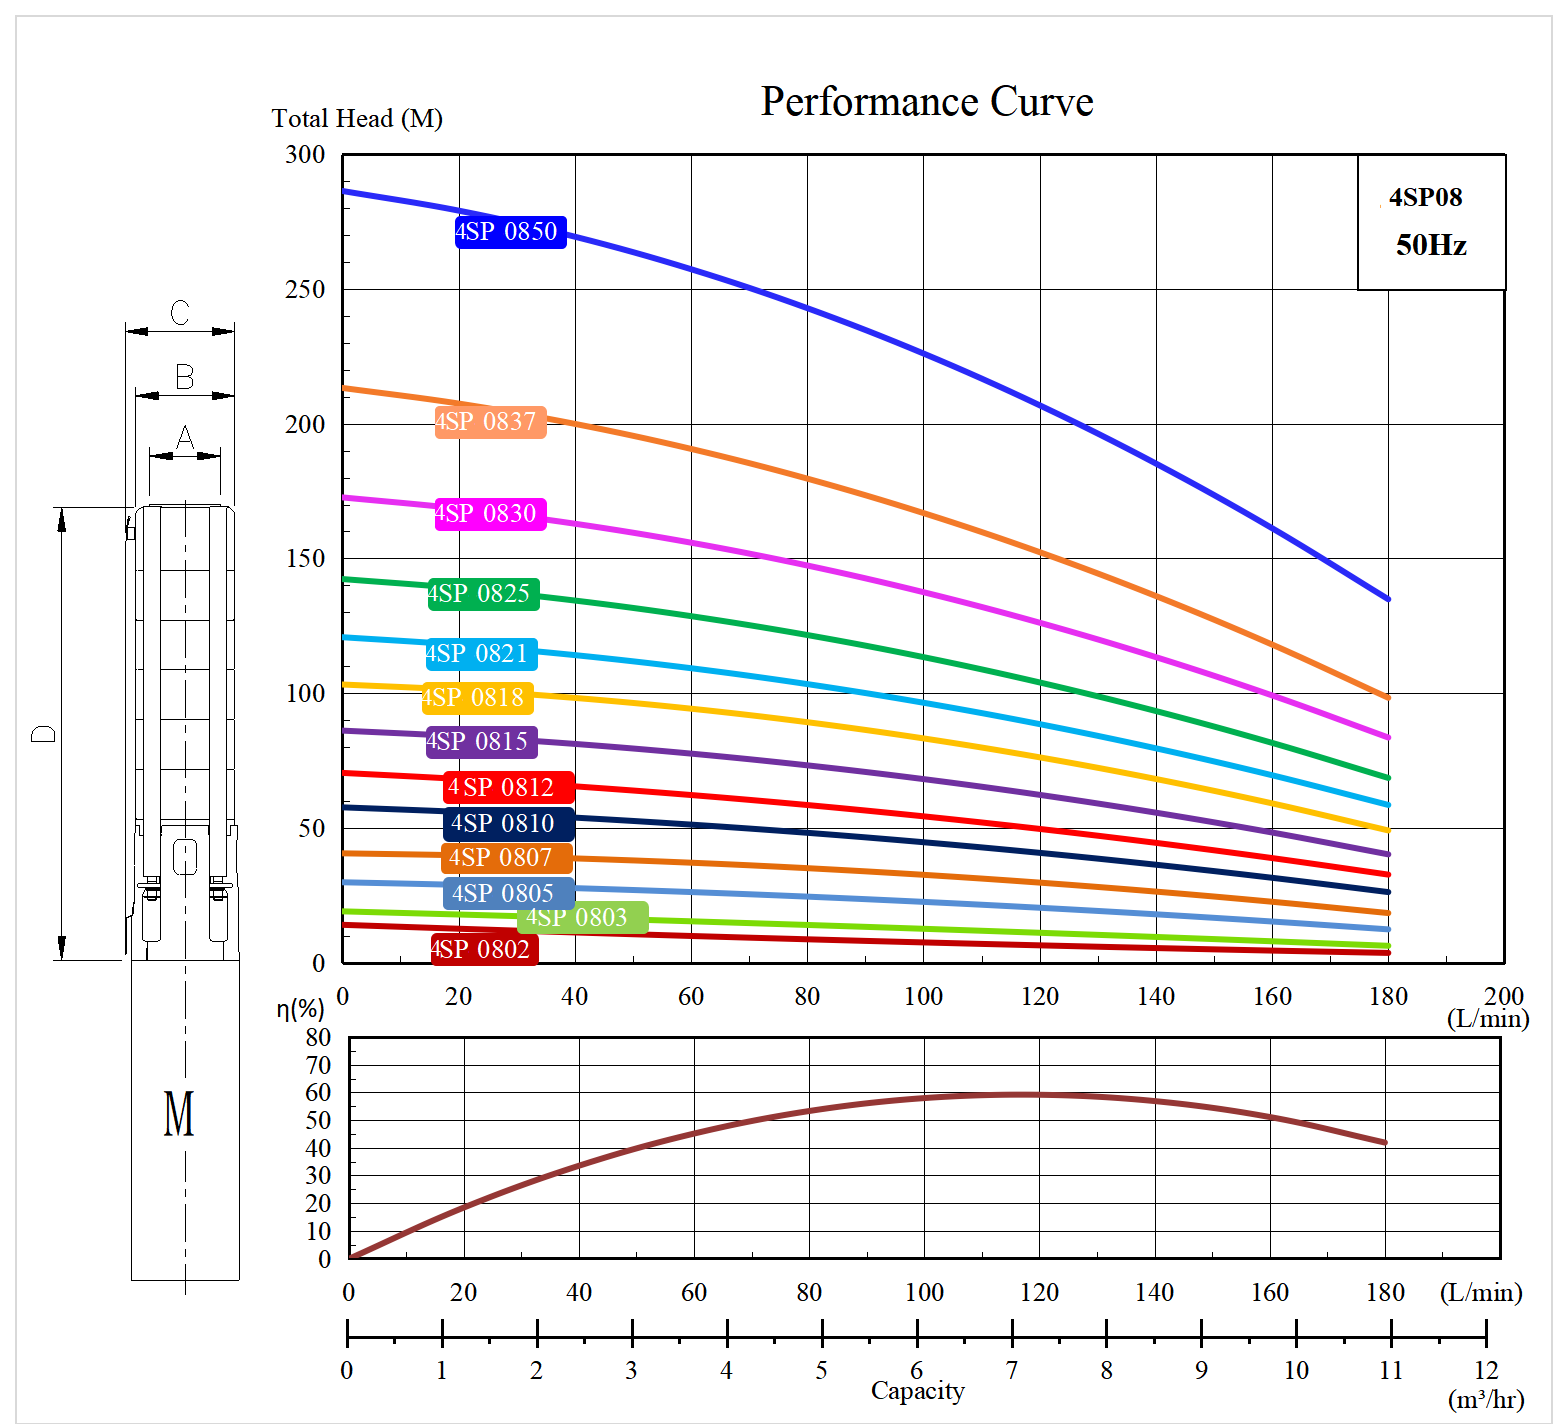  характеристики насос свердловинний 4SP0810 заміна та аналог насоса ЭЦВ5-6,5-40 